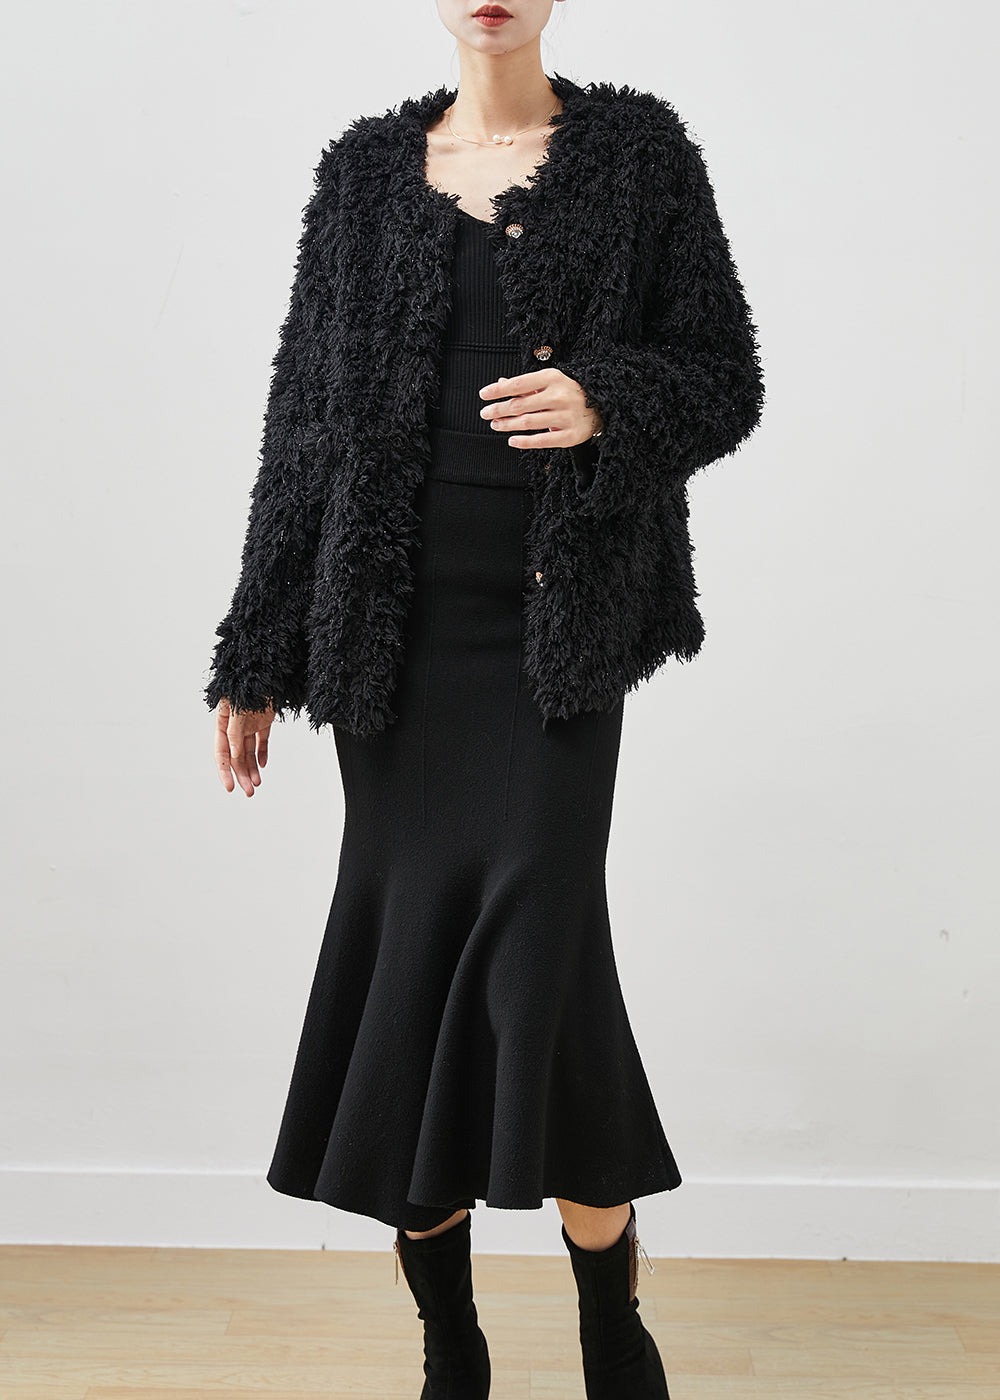 Modern Black Sequins Faux Fur Coats And Dress Two-Piece Set Winter